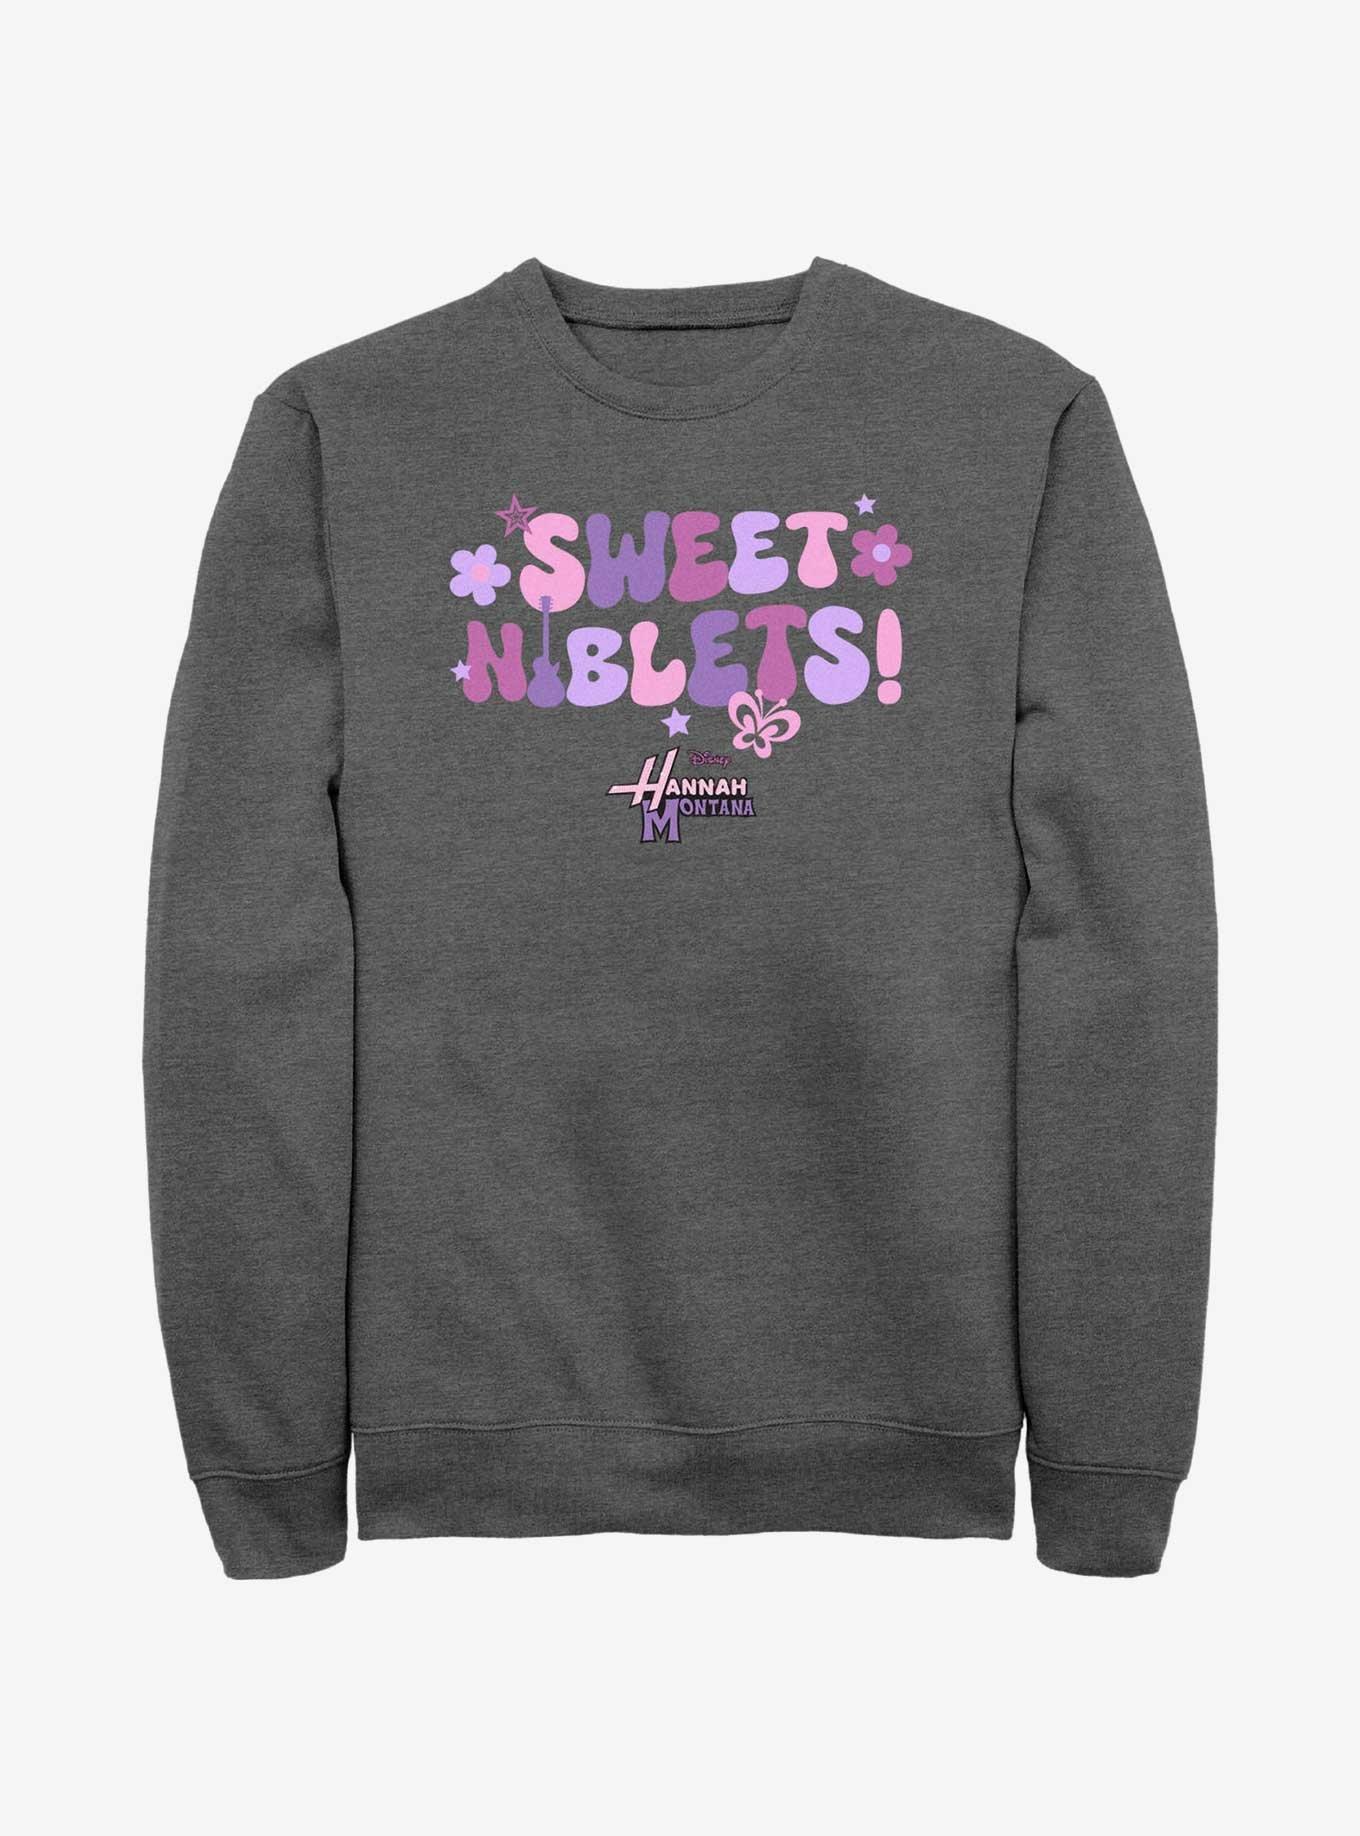 Disney Channel Hannah Montana Sweet Niblets Sweatshirt, , hi-res